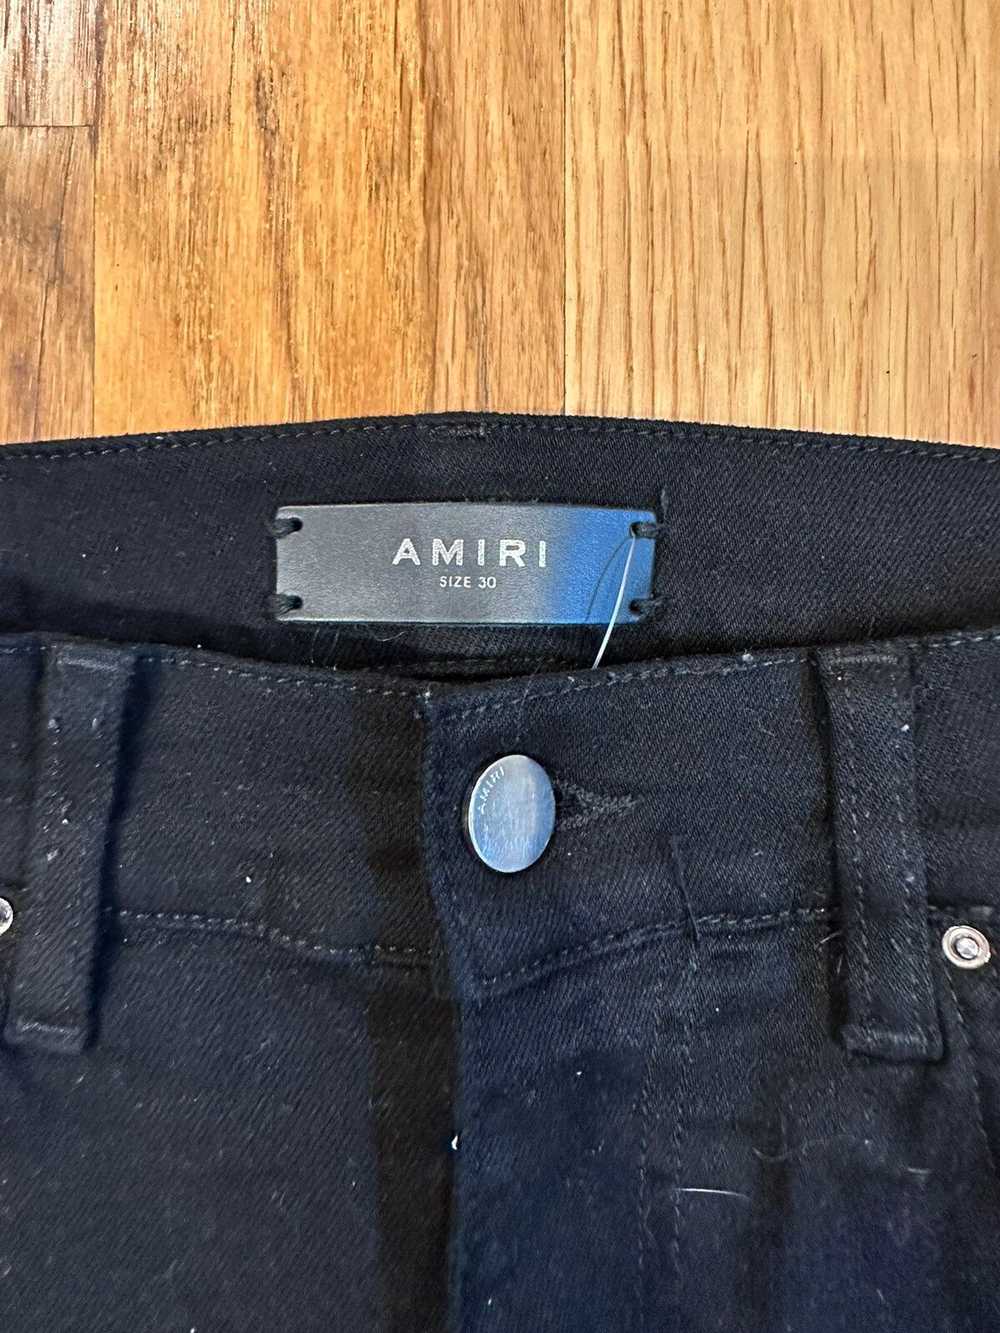 Amiri Amiri Gold Stripe Black Denim Jeans Size 30 - image 4